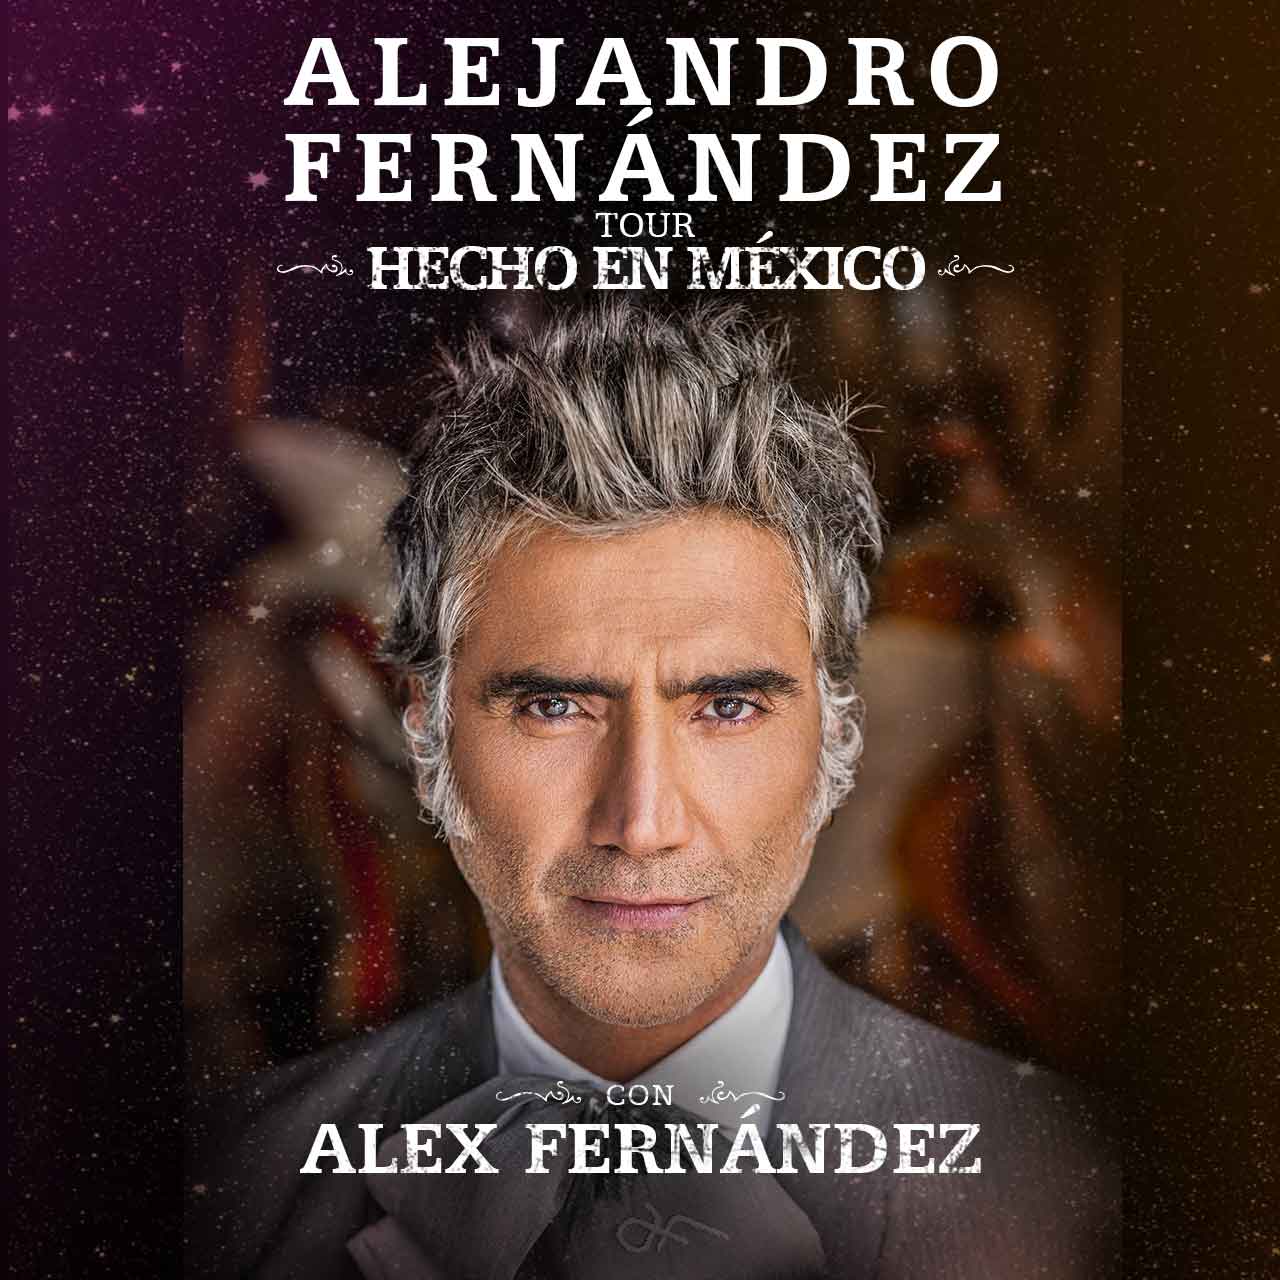 alejandro fernandez hecho en mexico tour setlist